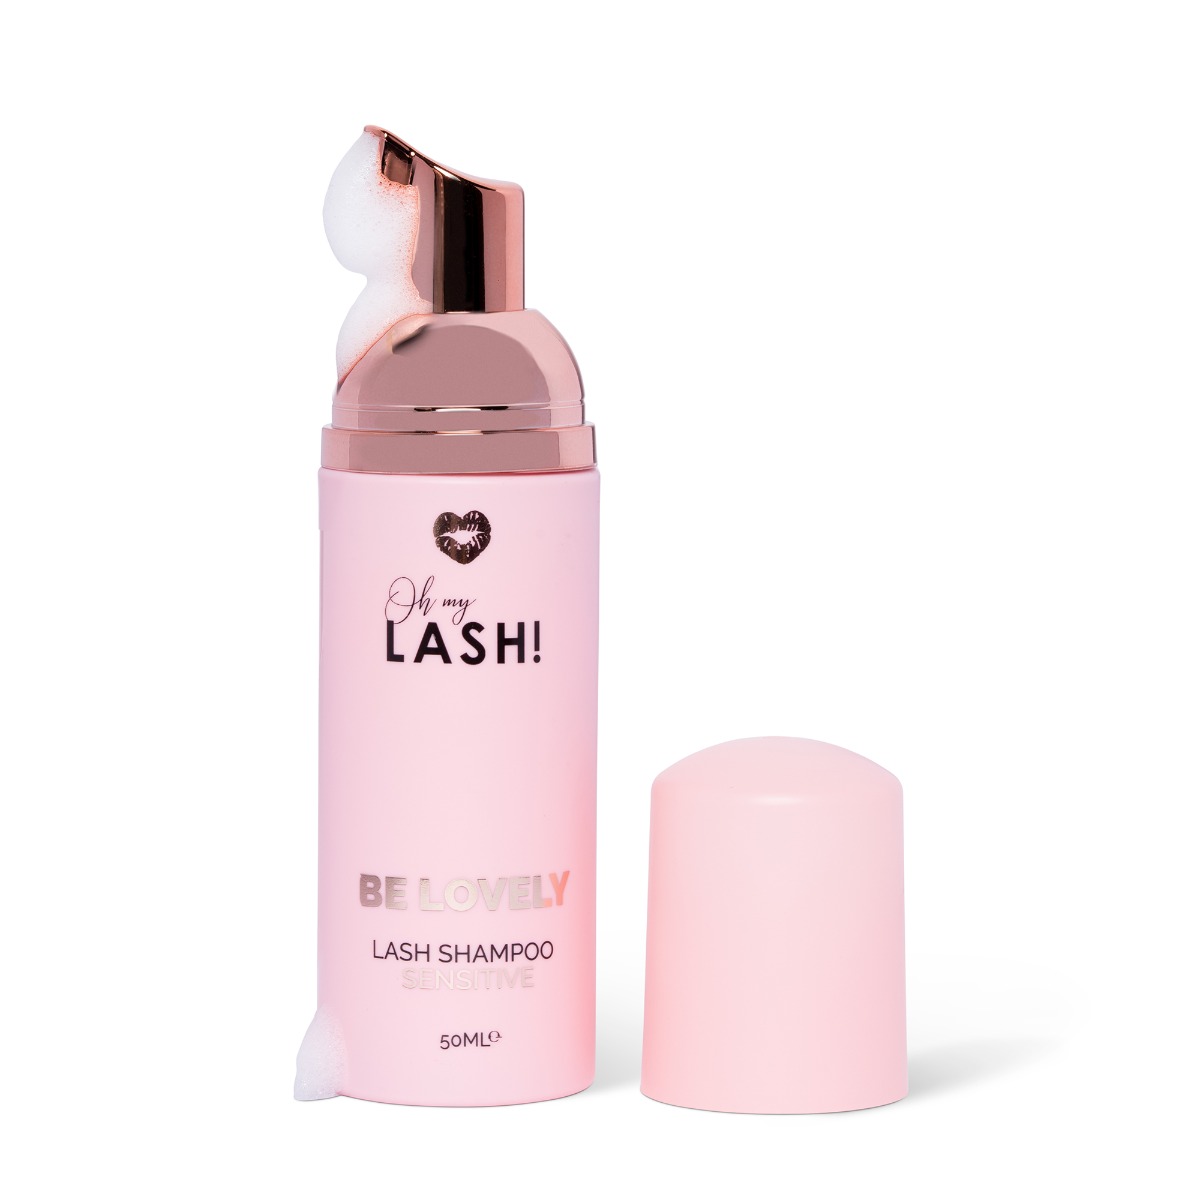 Be Lovely – Lash Shampoo Sensitive 50ml